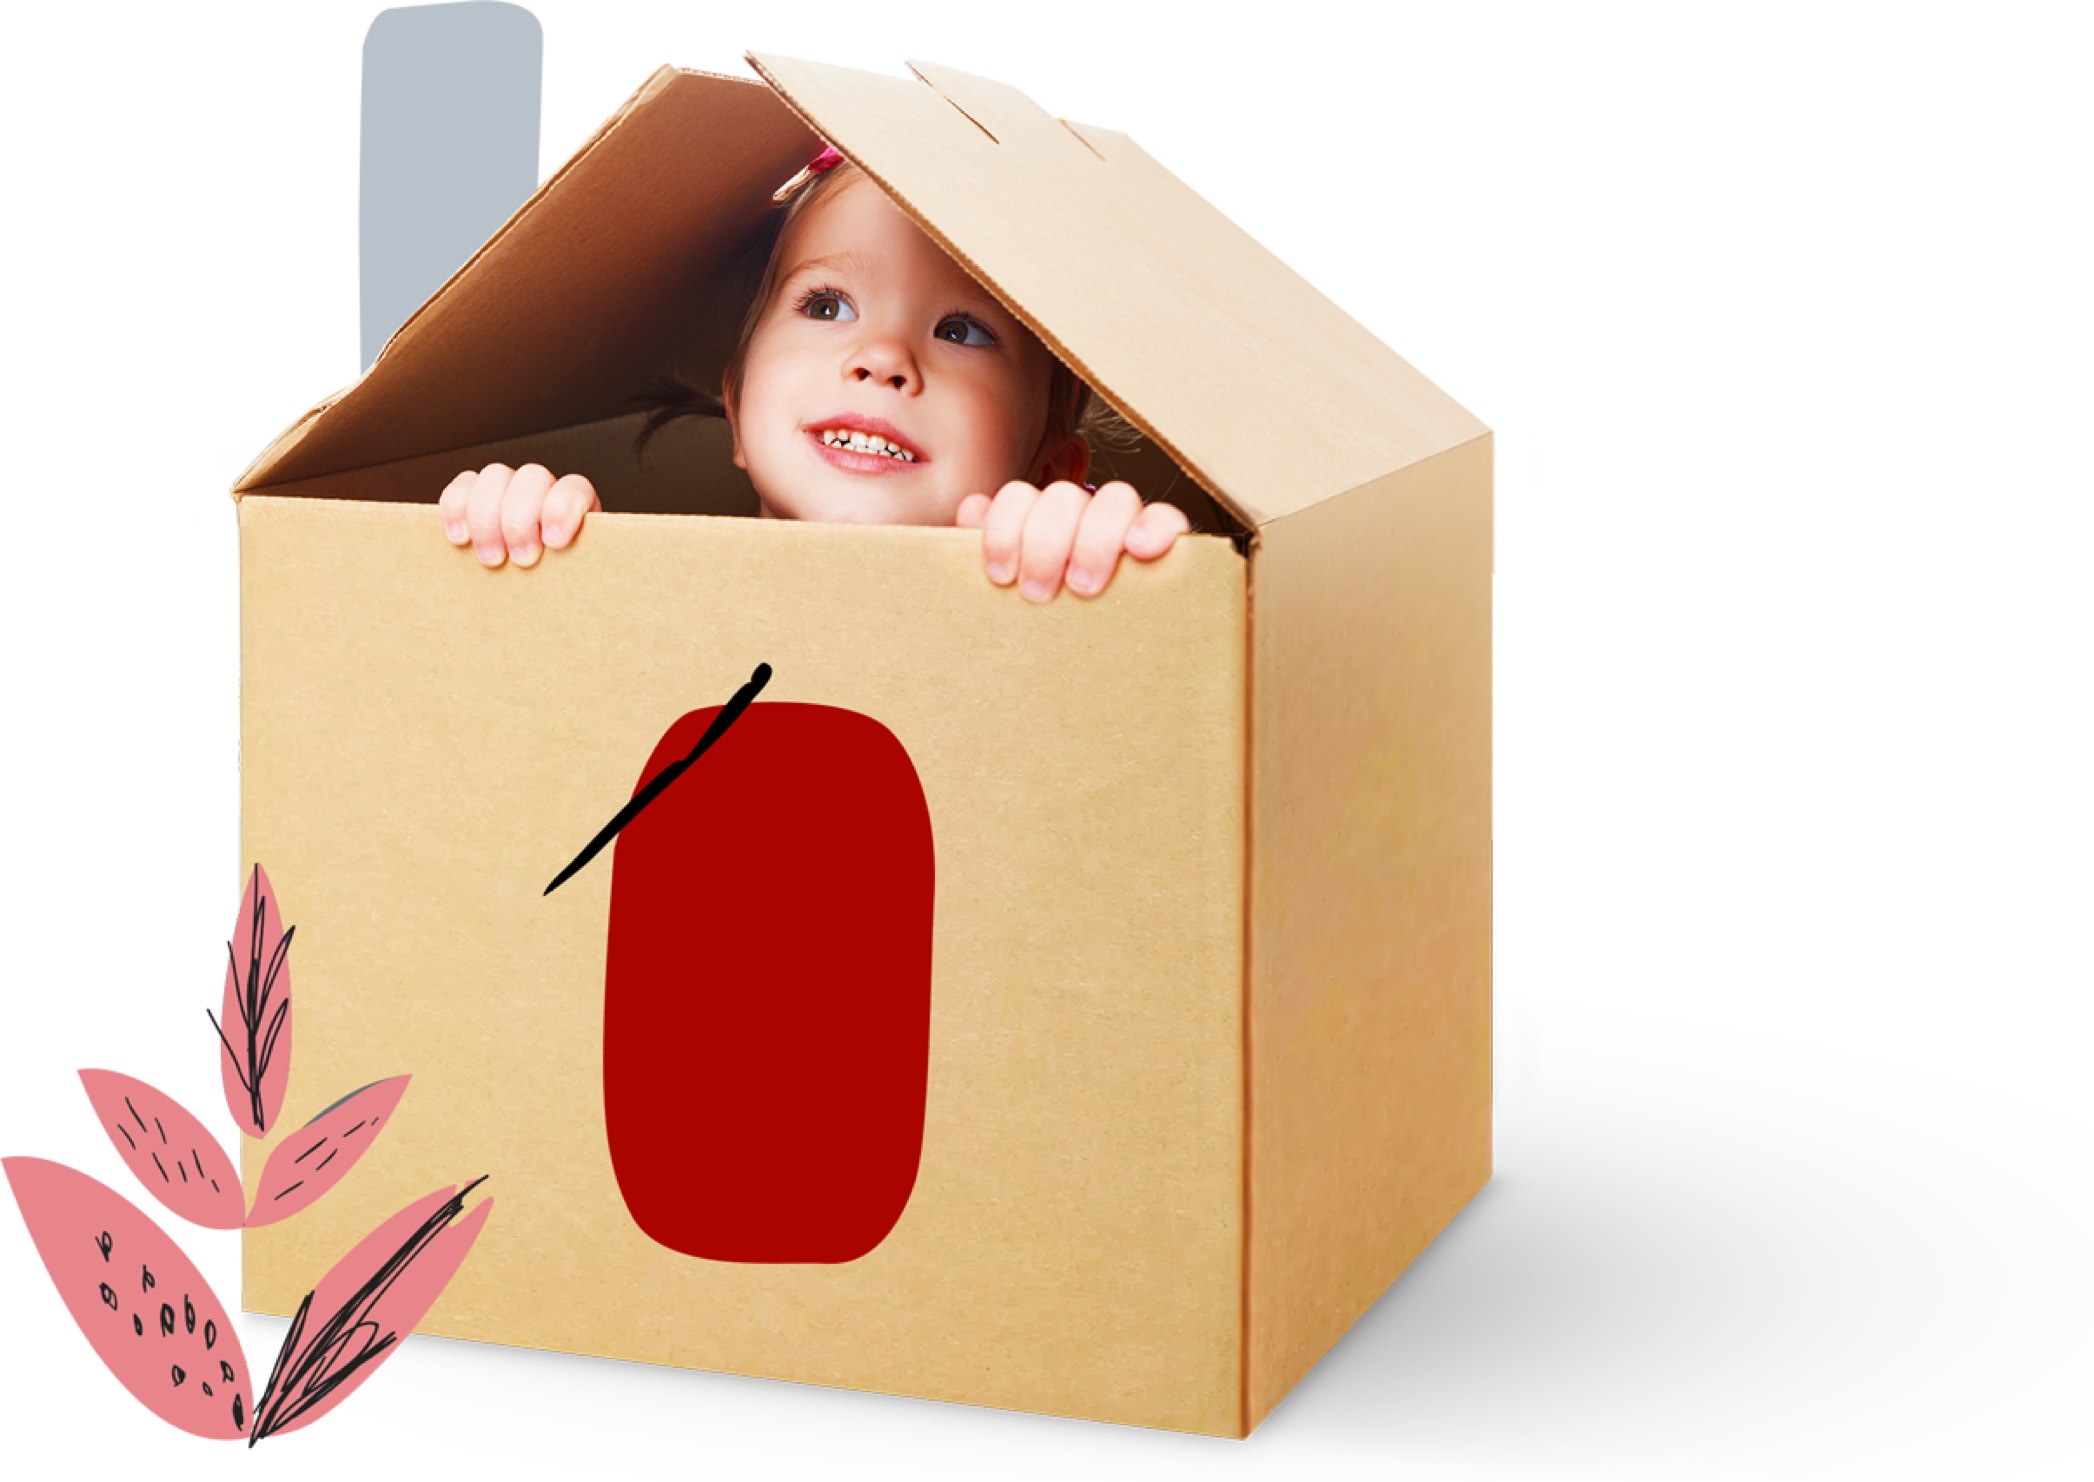 Kid peeking from inside a cardboard box